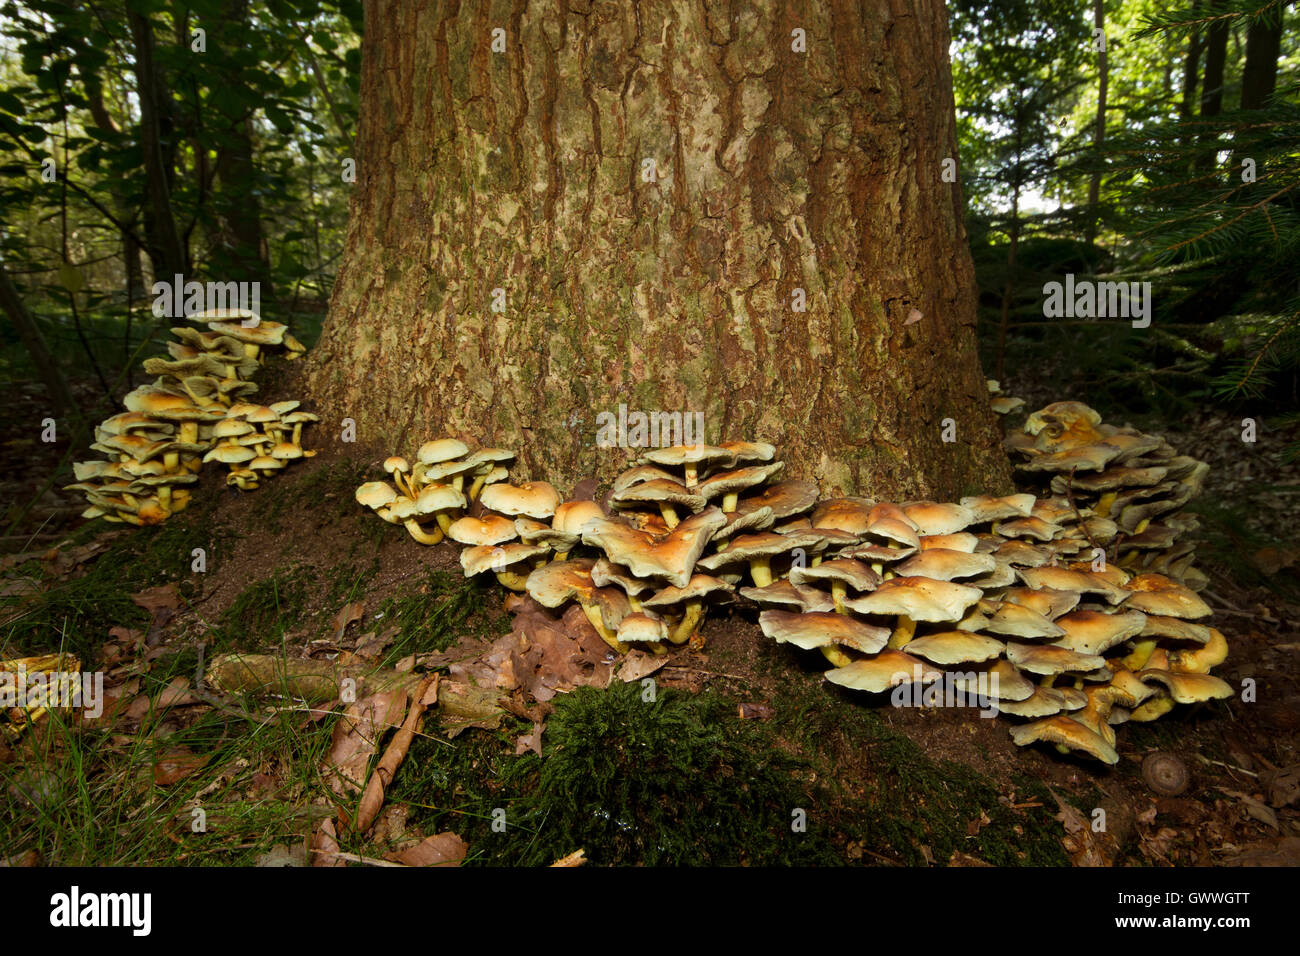 Sulphur Tuft, a poisonous mushroom, growing on a dead Oak tree Stock Photo